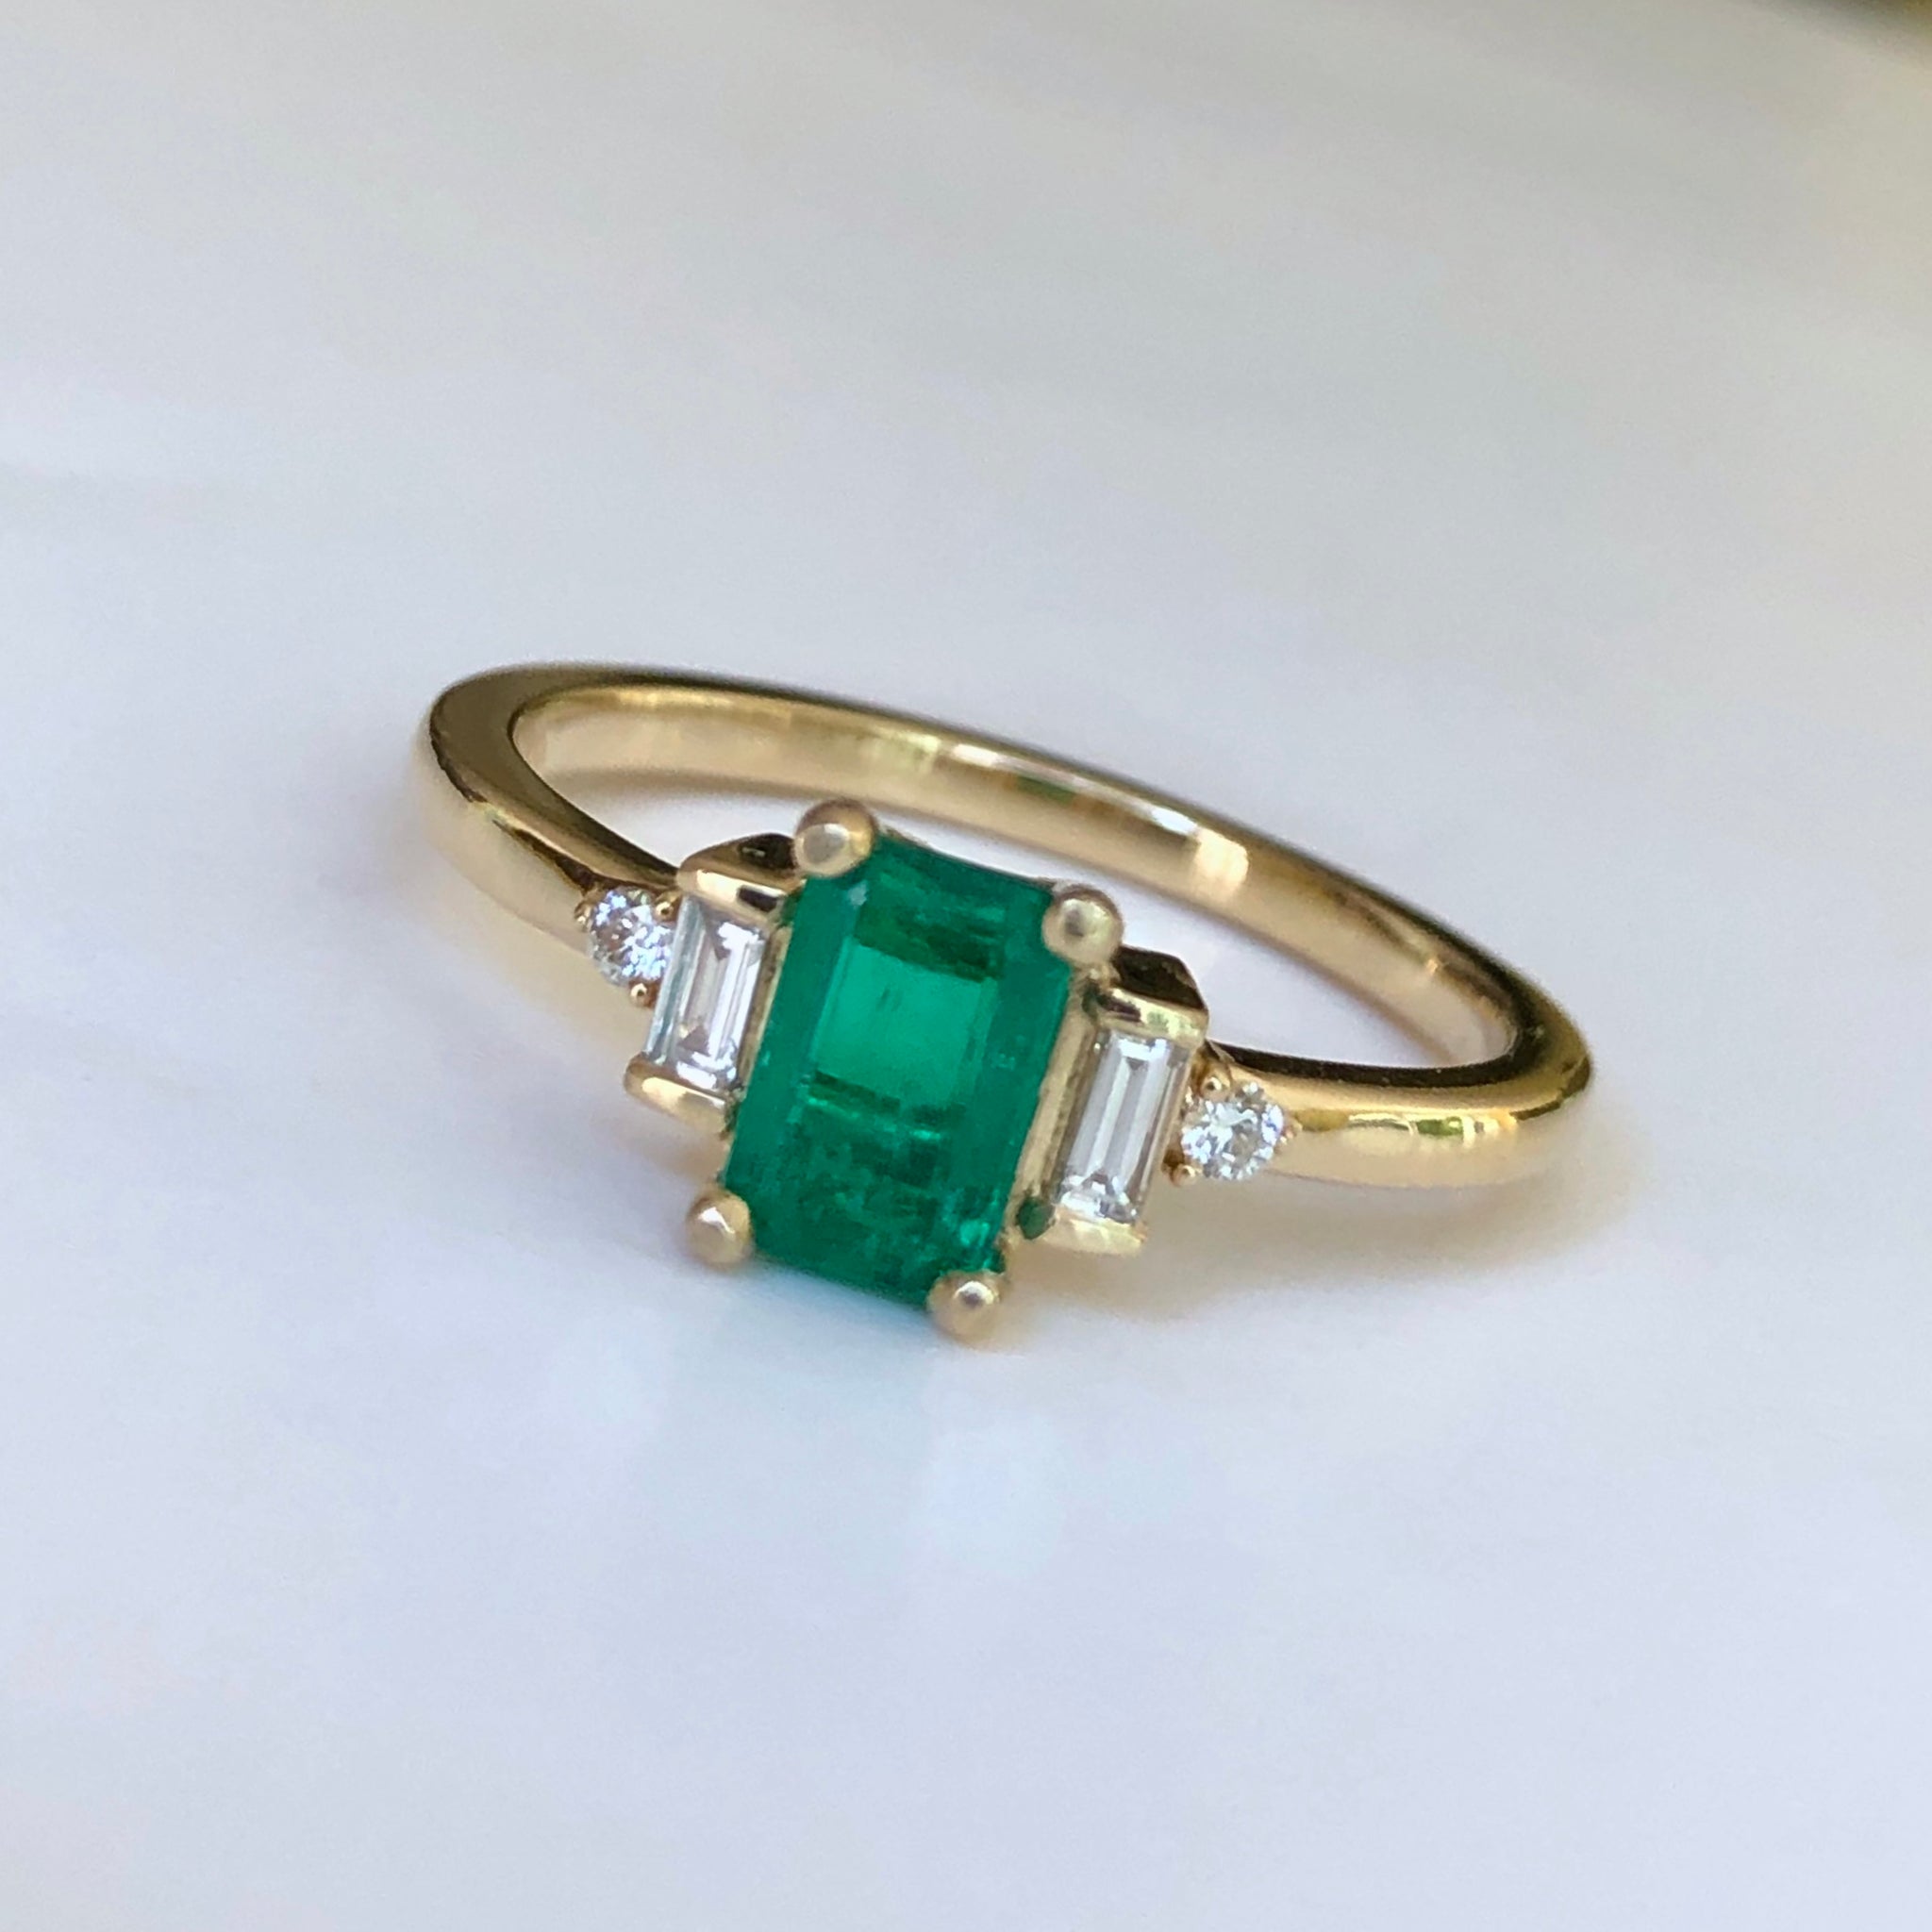 Rectangular Cut Emerald and Diamond Ring Gold